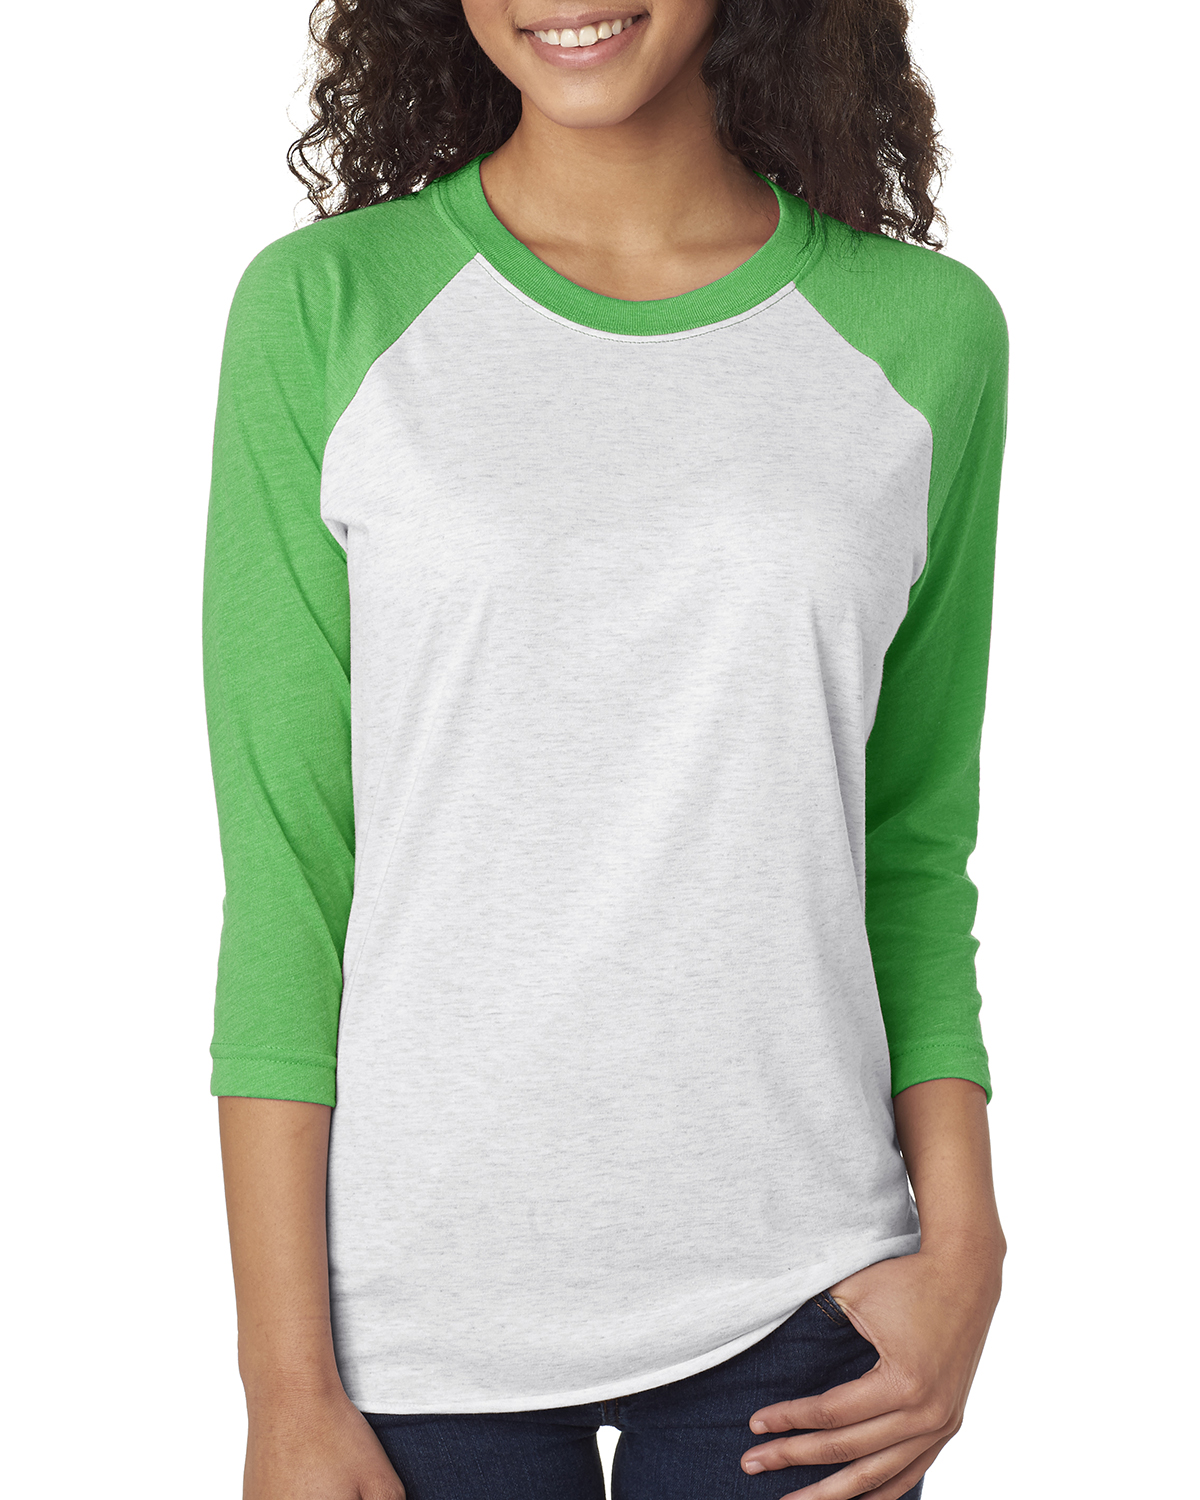 Mens Womens 3/4 Sleeve Raglan Baseball Triblend Casual T Shirt Tee Jersey Top